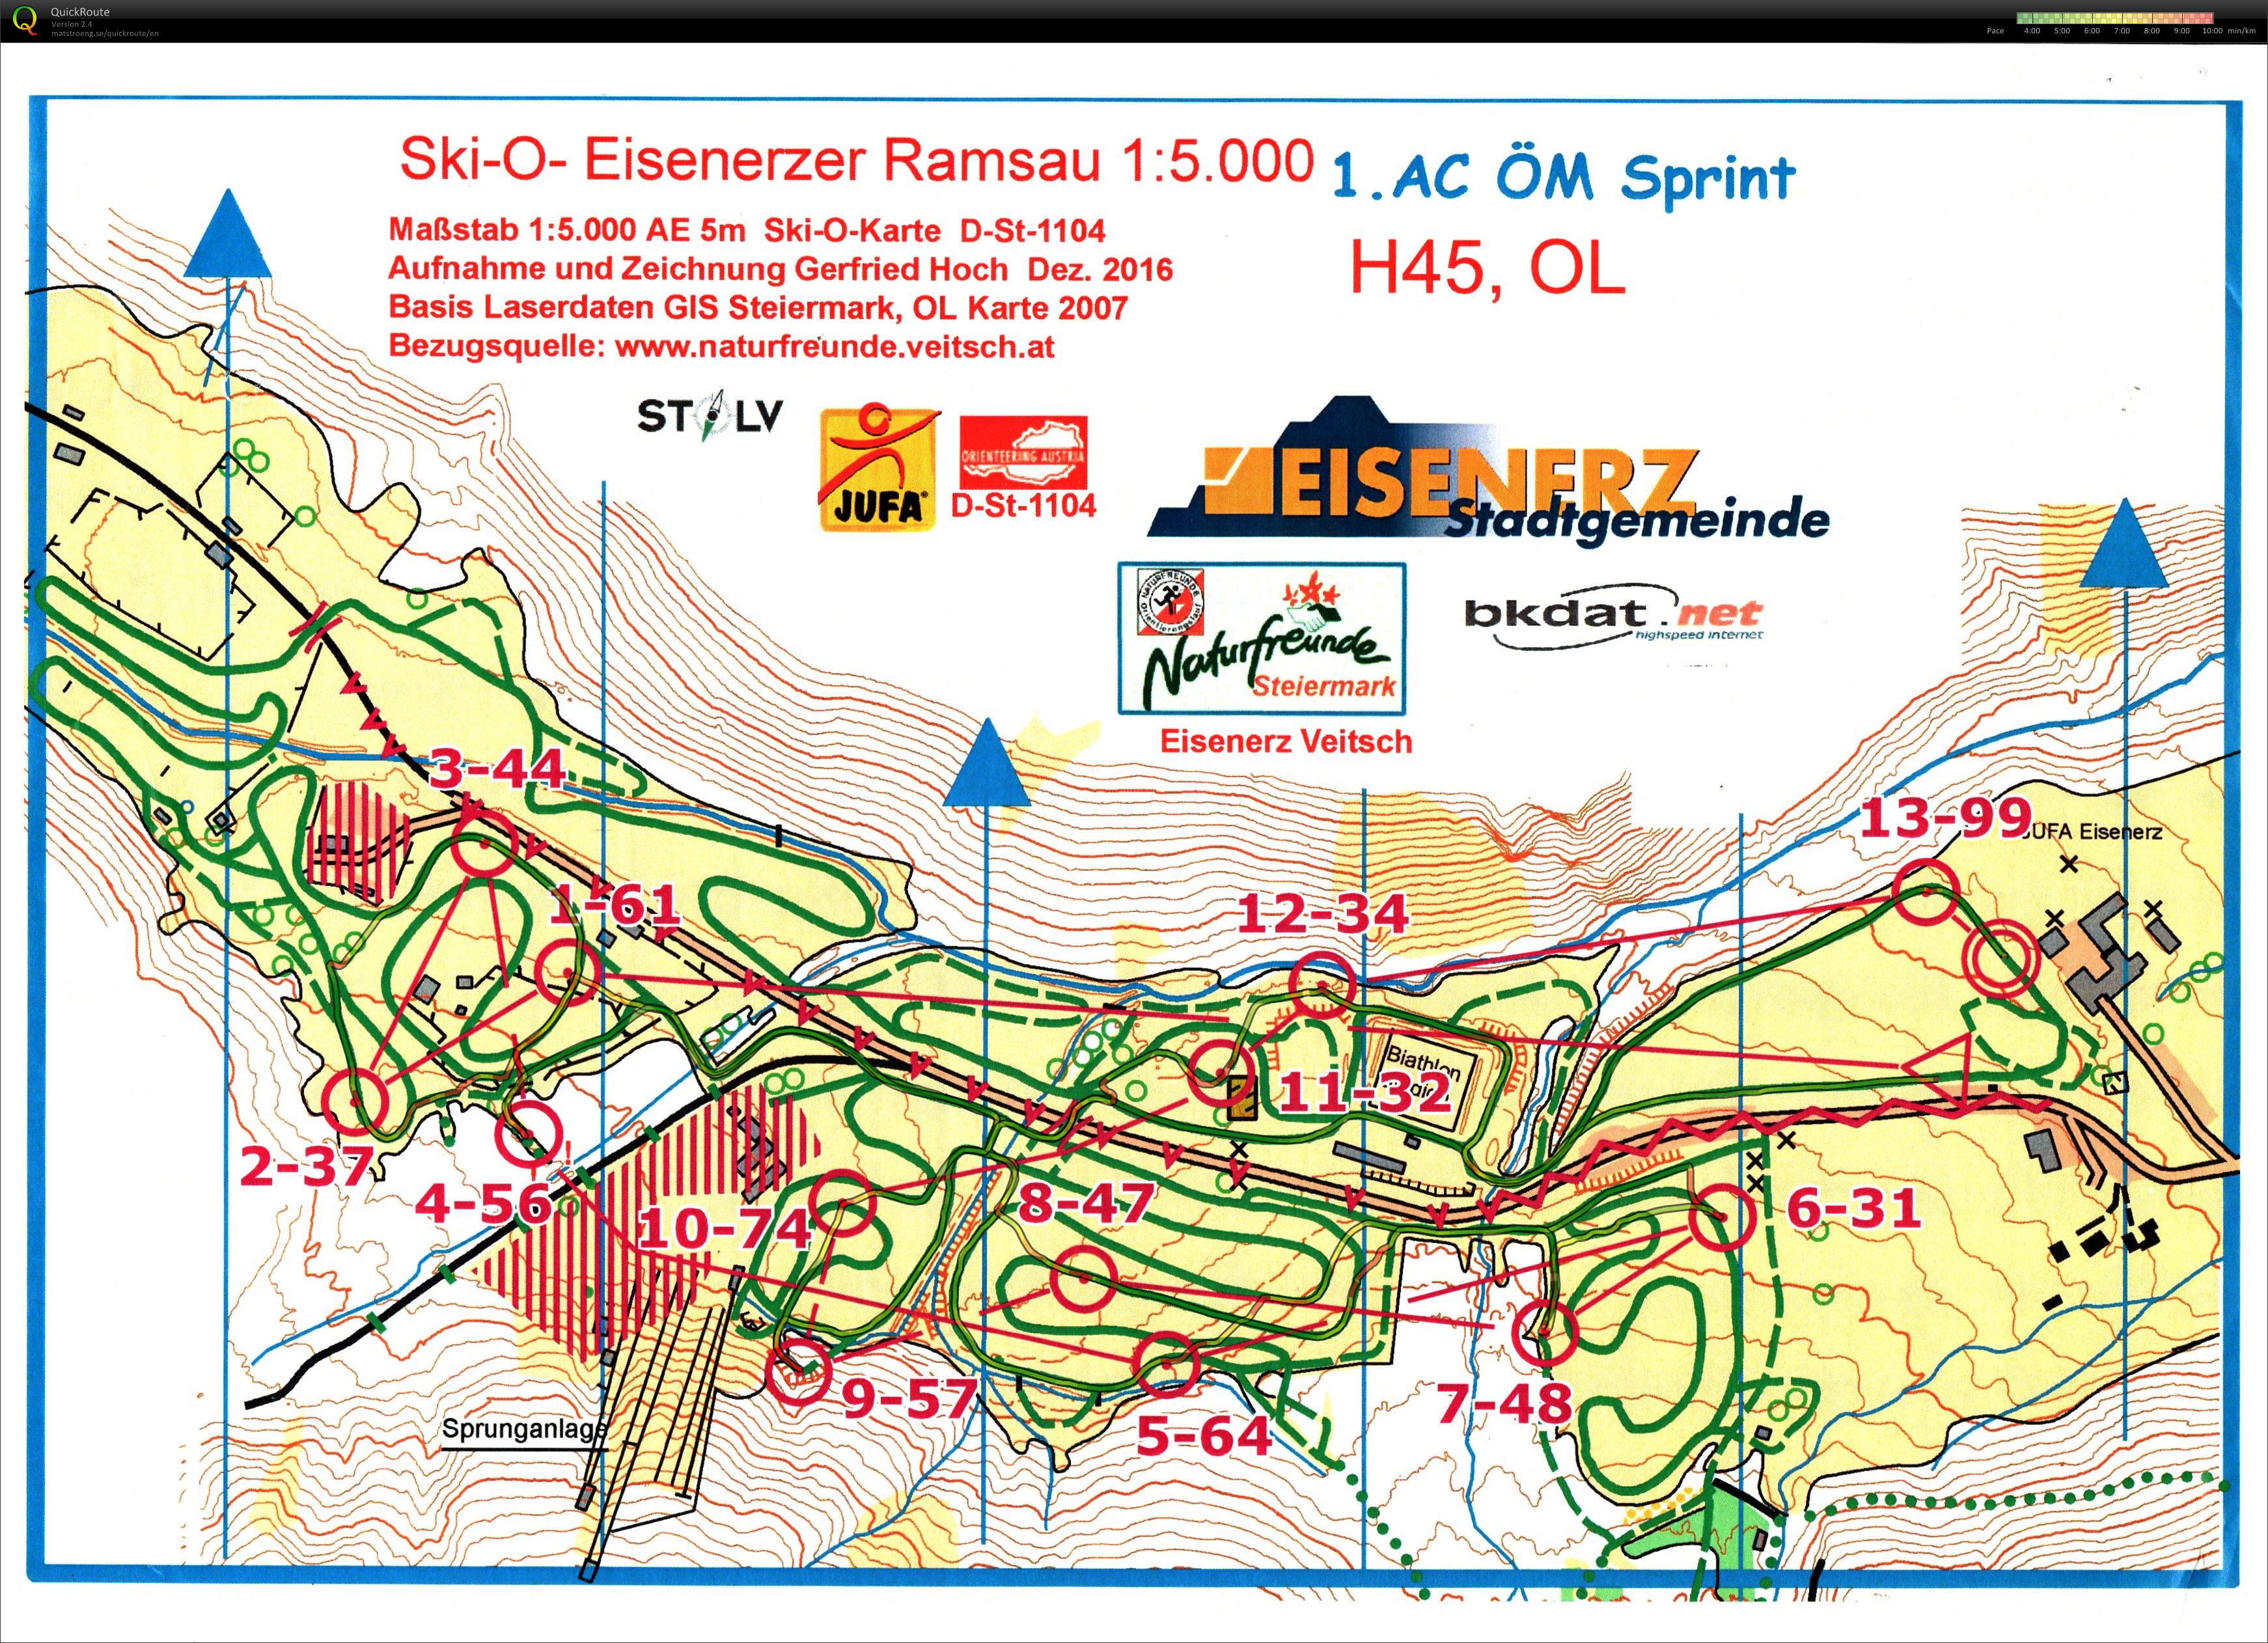 ÖM Sprint, 1. Ski-O Austria Cup (17/12/2016)